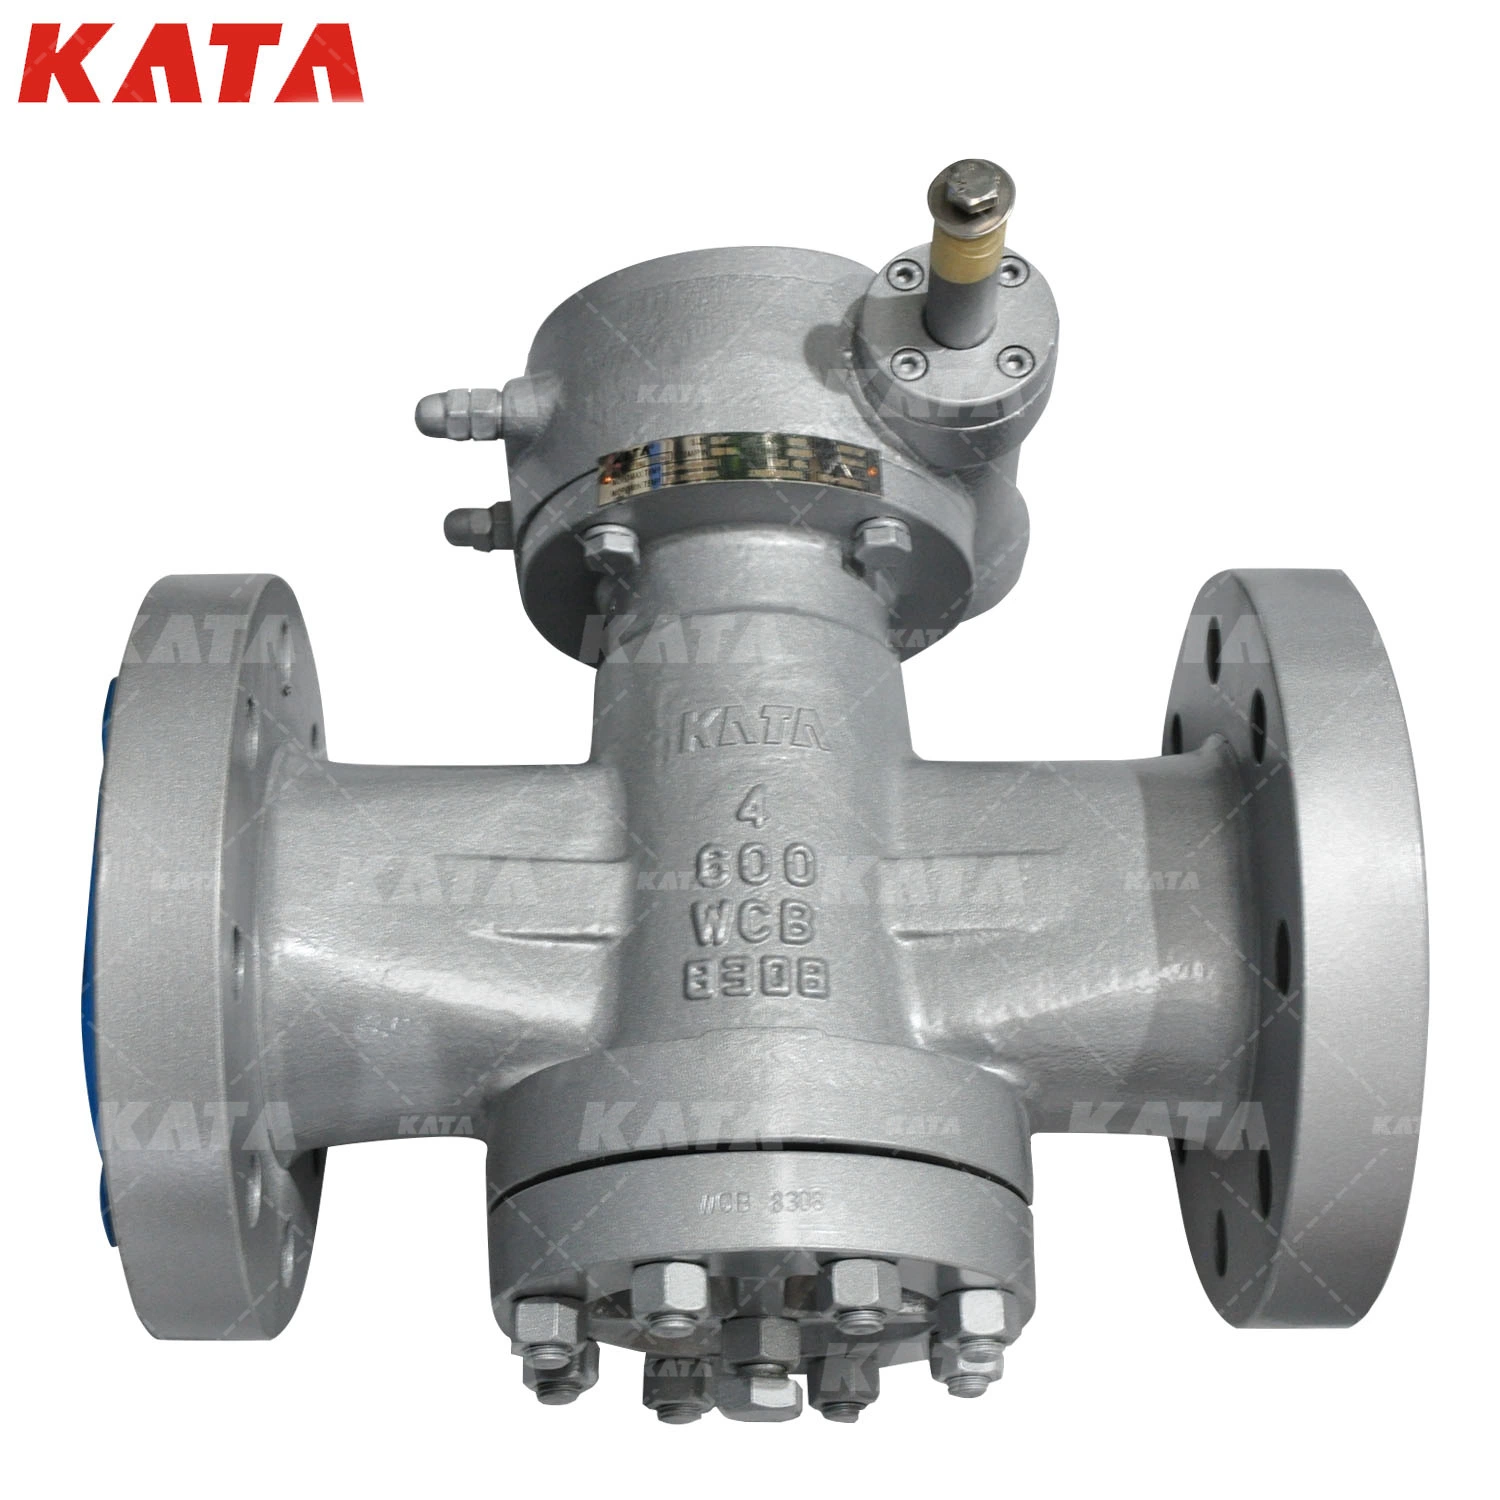 Kata Inverted Pressure Balance Lubricated Plug Valve 36" 300lb Wcb